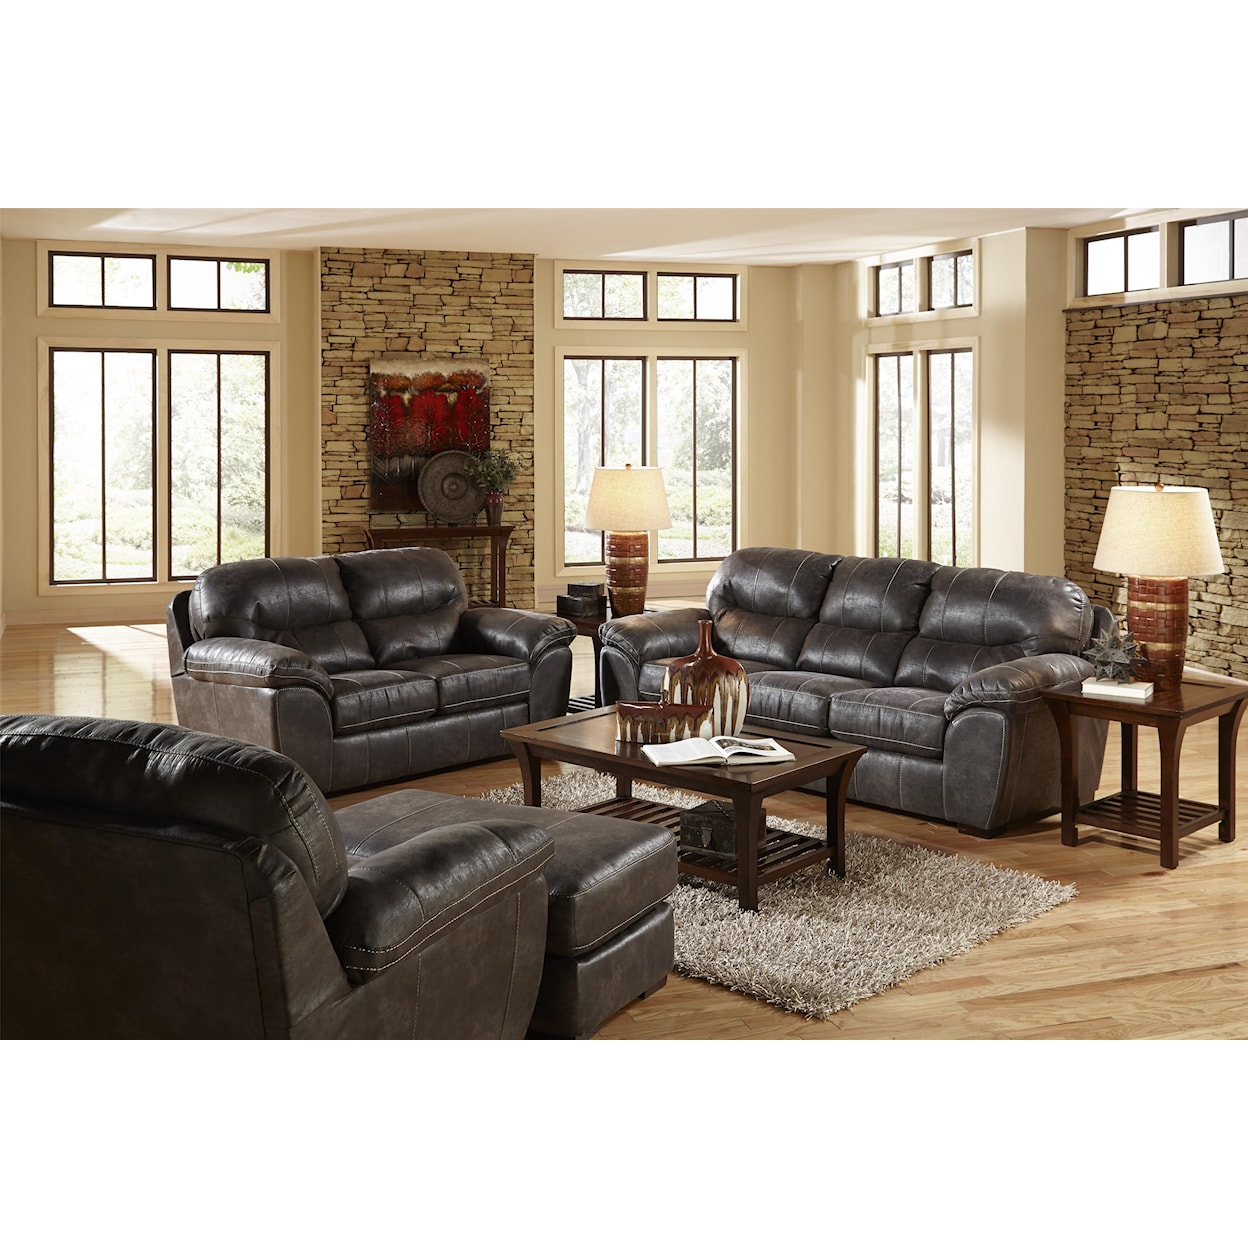 Carolina Furniture 4453 Grant Stationary Living Room Group